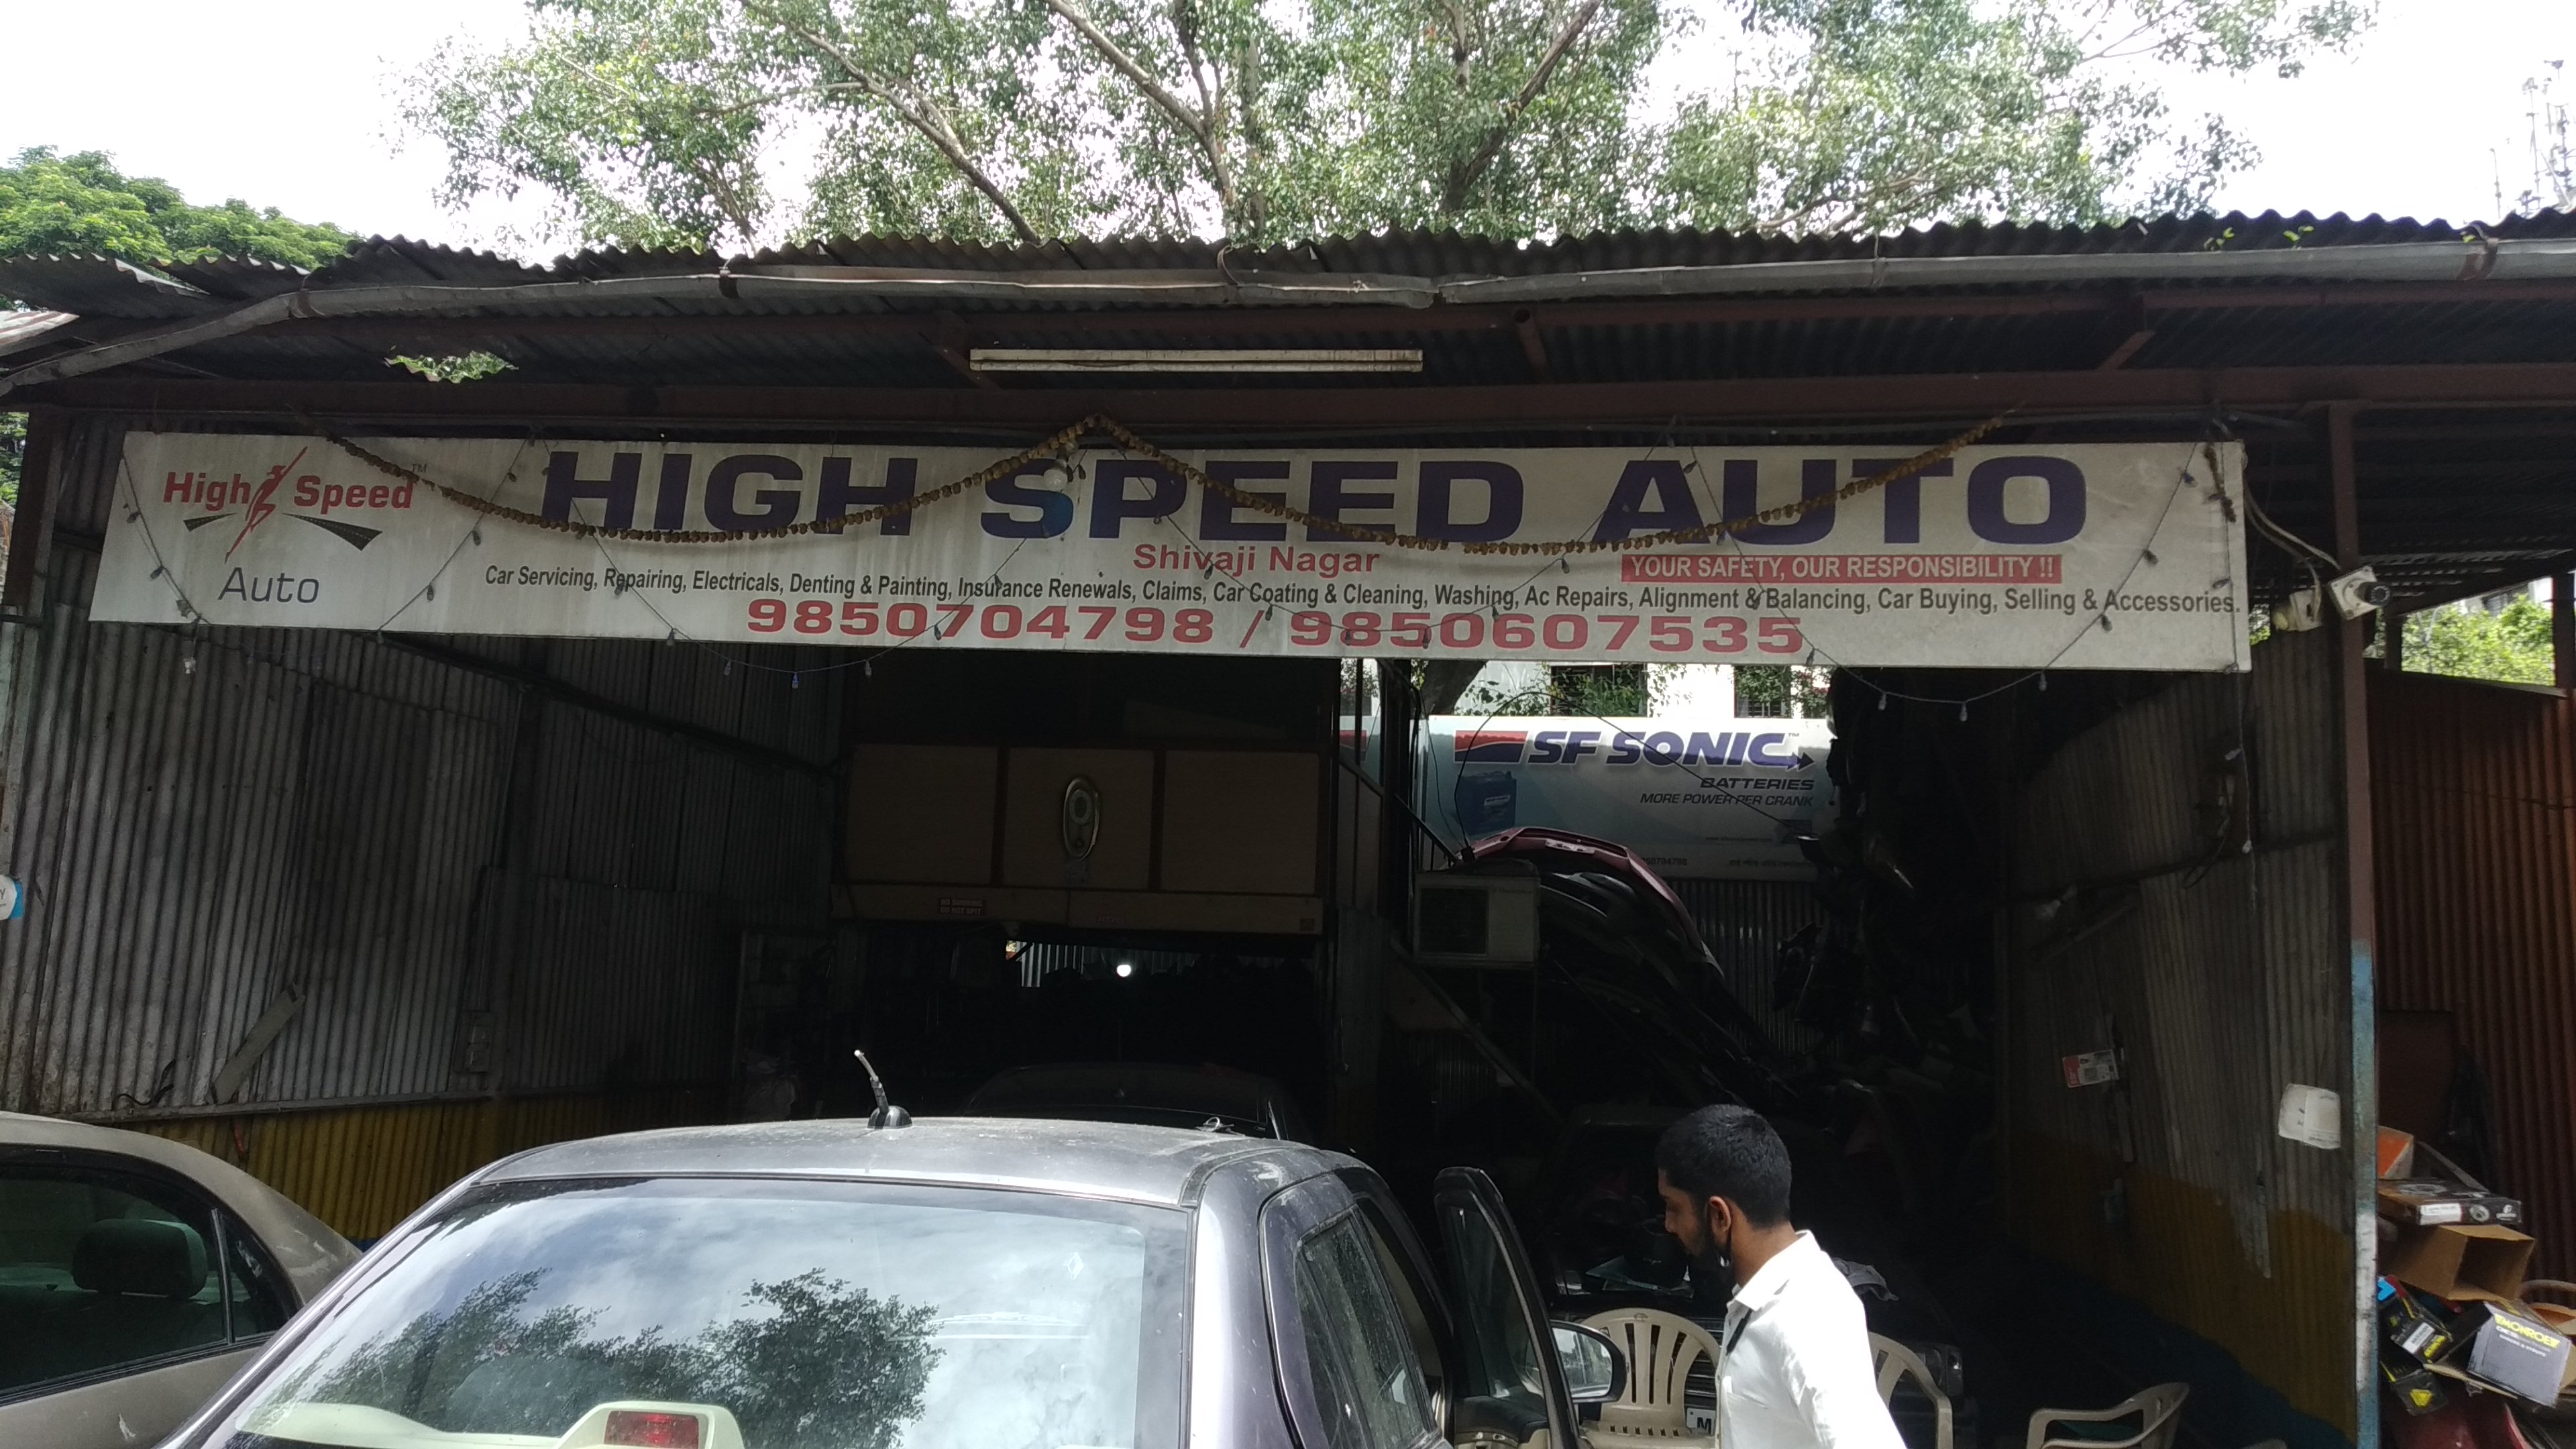 High Speed Auto Washing Center in Shivaji Nagar Pune at Affordable Price.